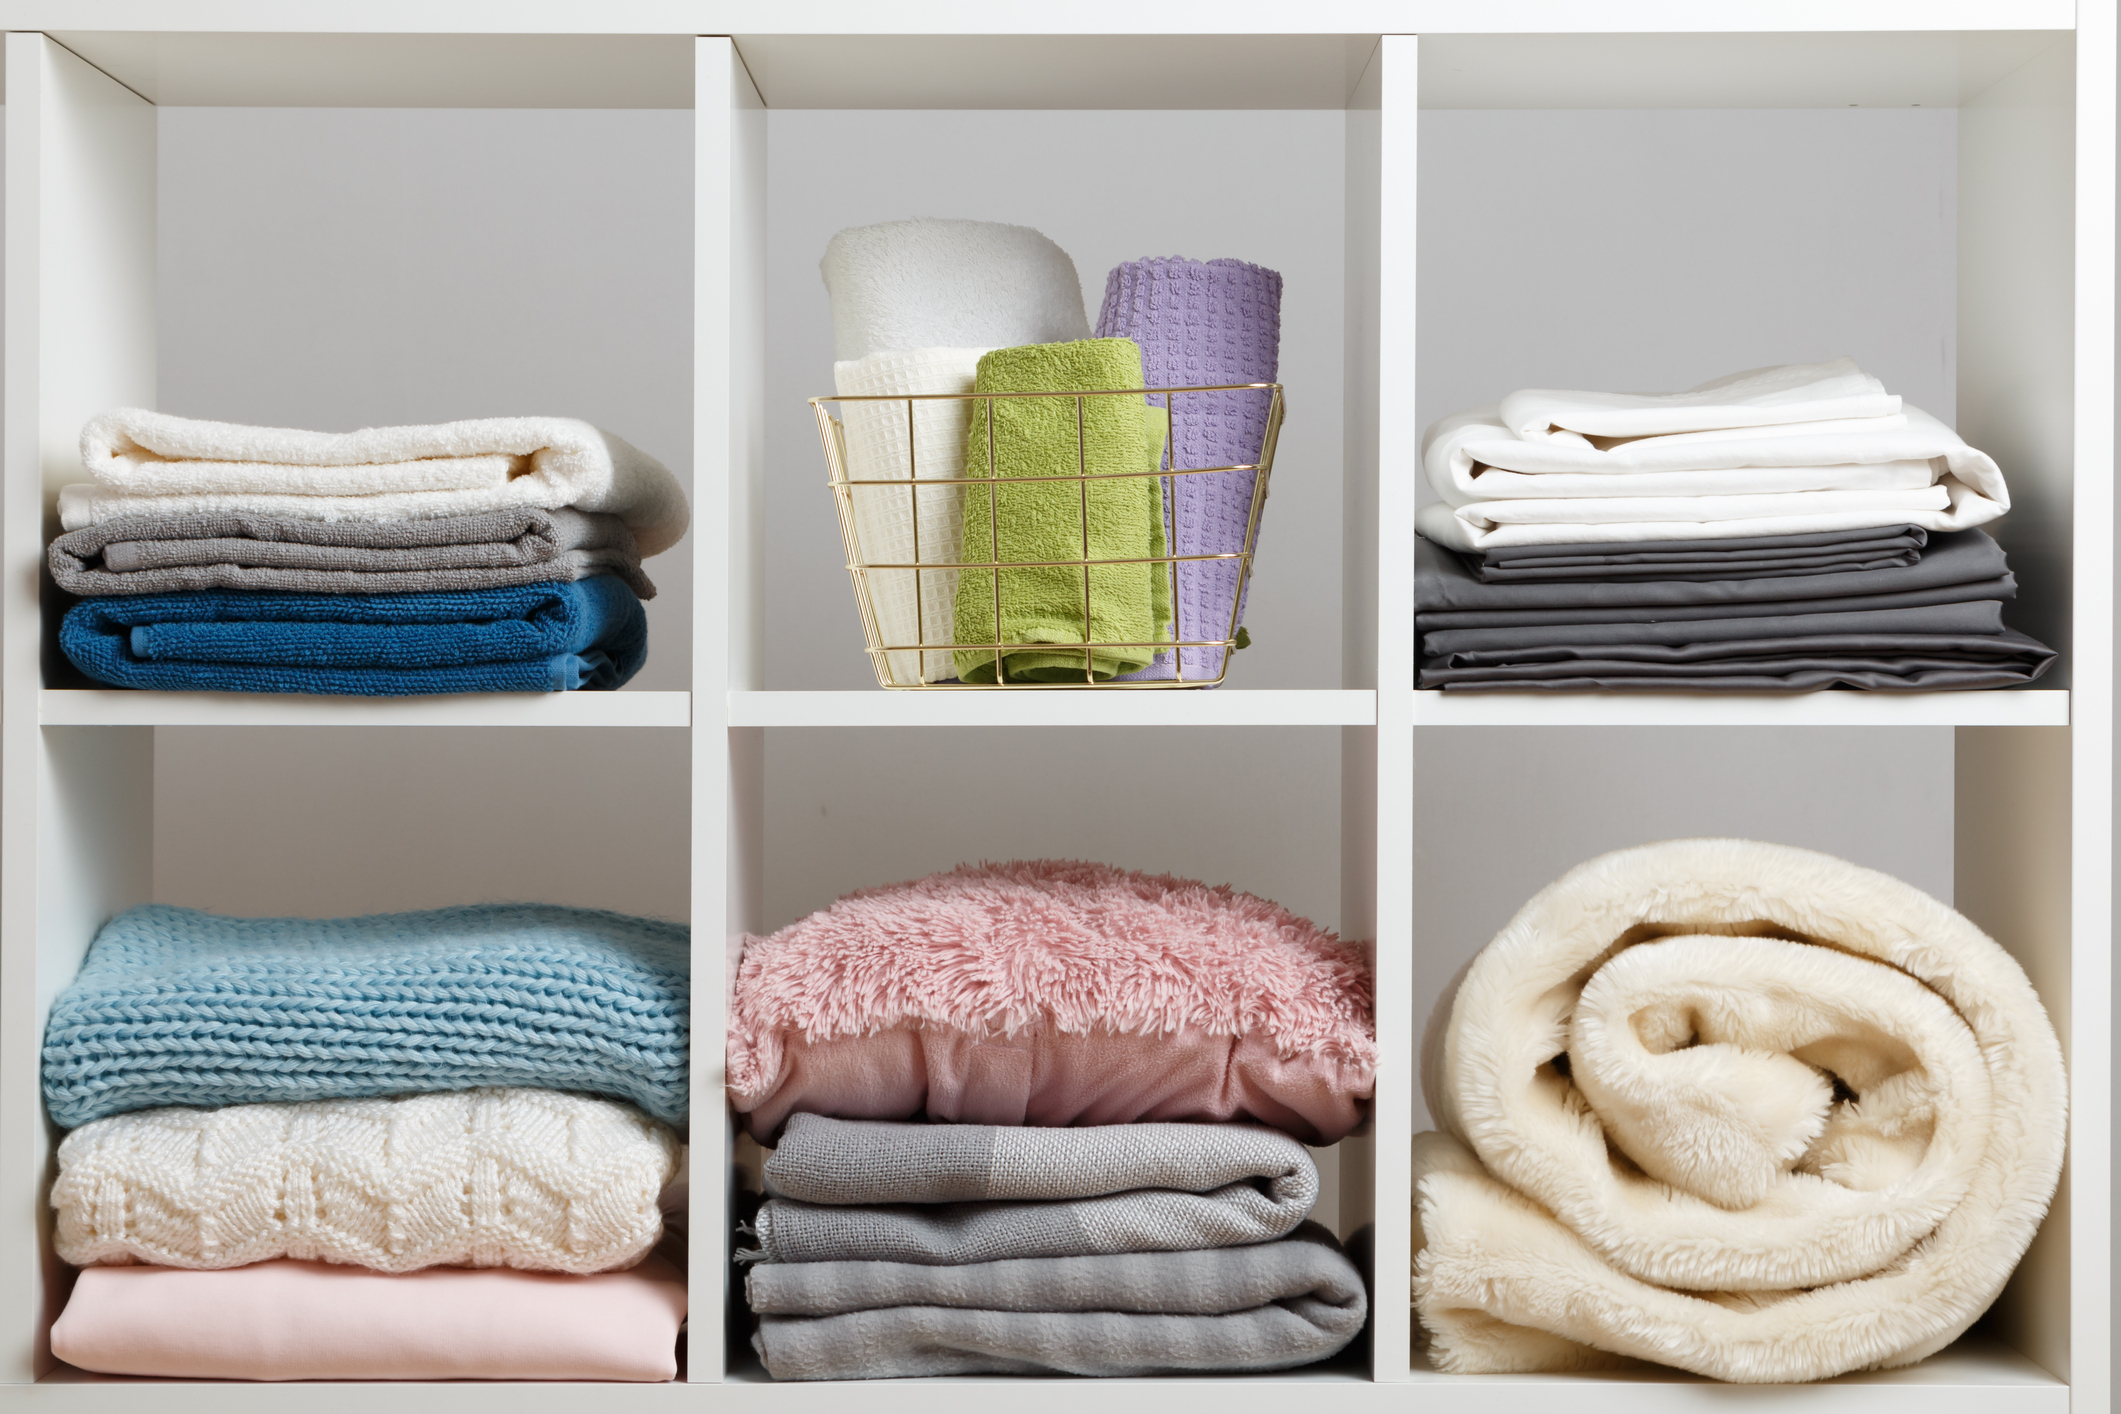 12 Linen Closet Organization Ideas for Easy Access to Essentials